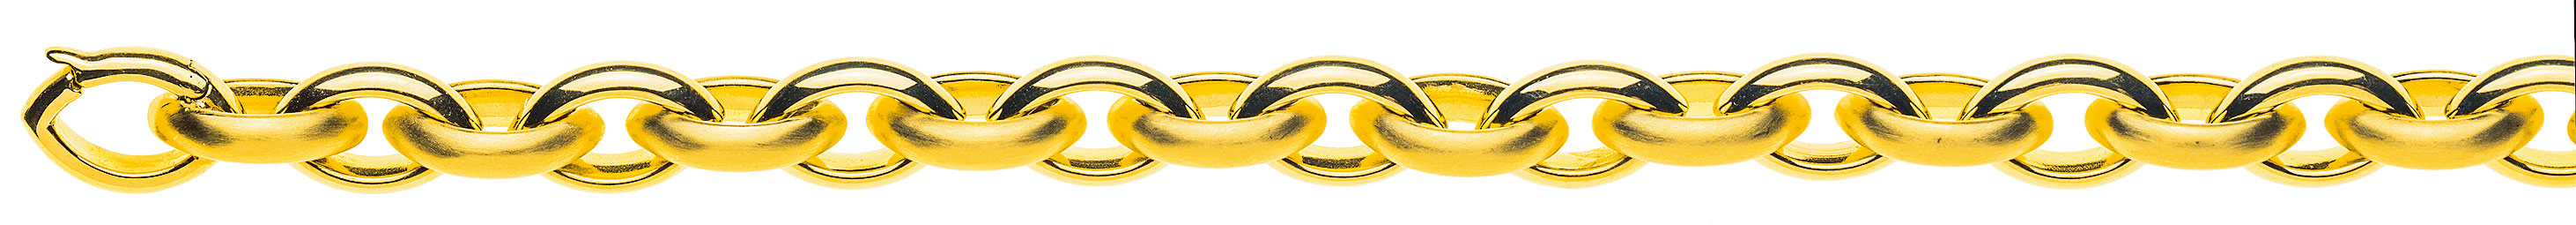 AURONOS Prestige Halskette Gelbgold 18K Navettekette Handarbeit 45cm 9.5mm